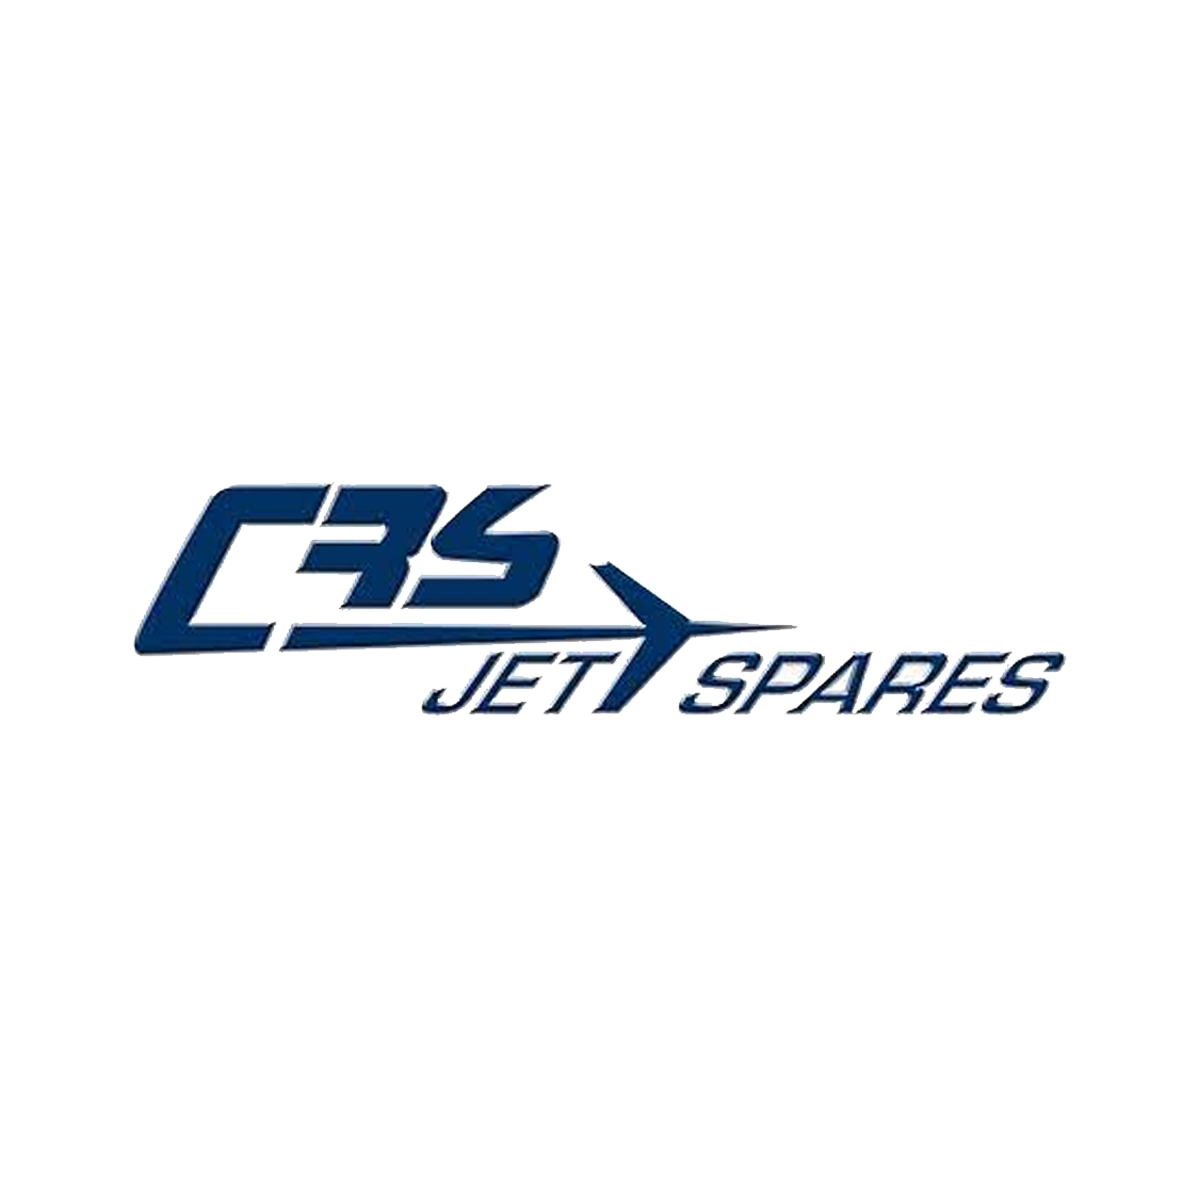 Logo CRS Jet Spares